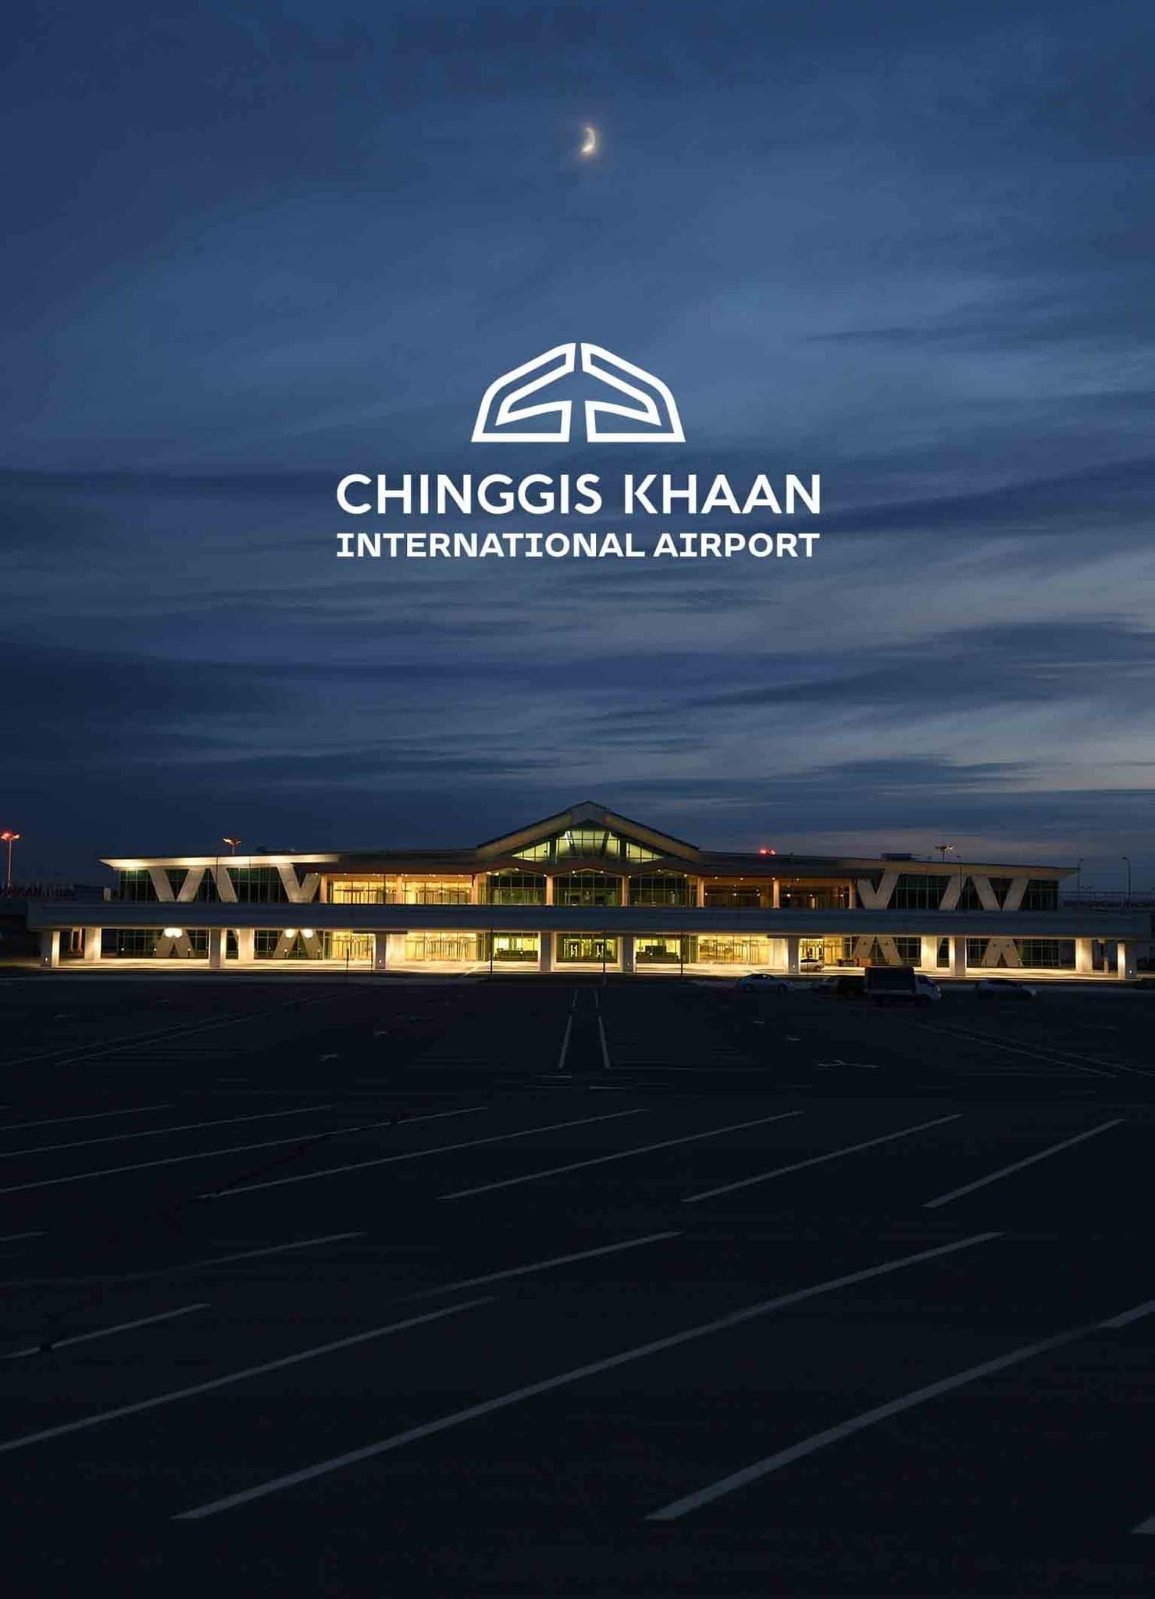 Chinggis Khaan International Airport was successfully opened